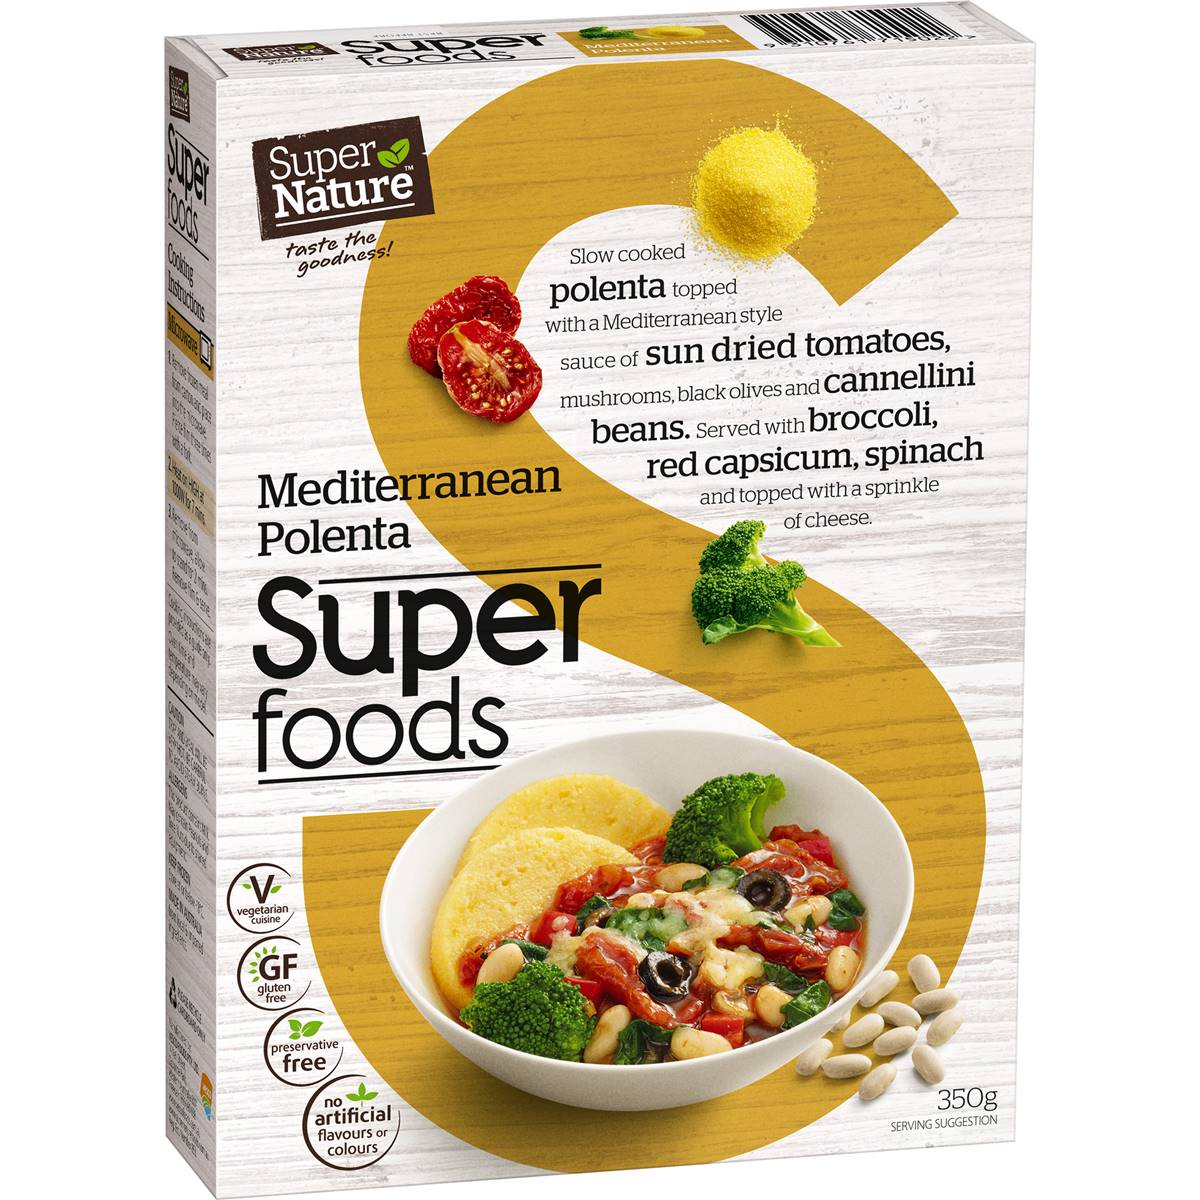 Calories in Super Nature Super Foods Mediterranean Polenta Frozen Meal